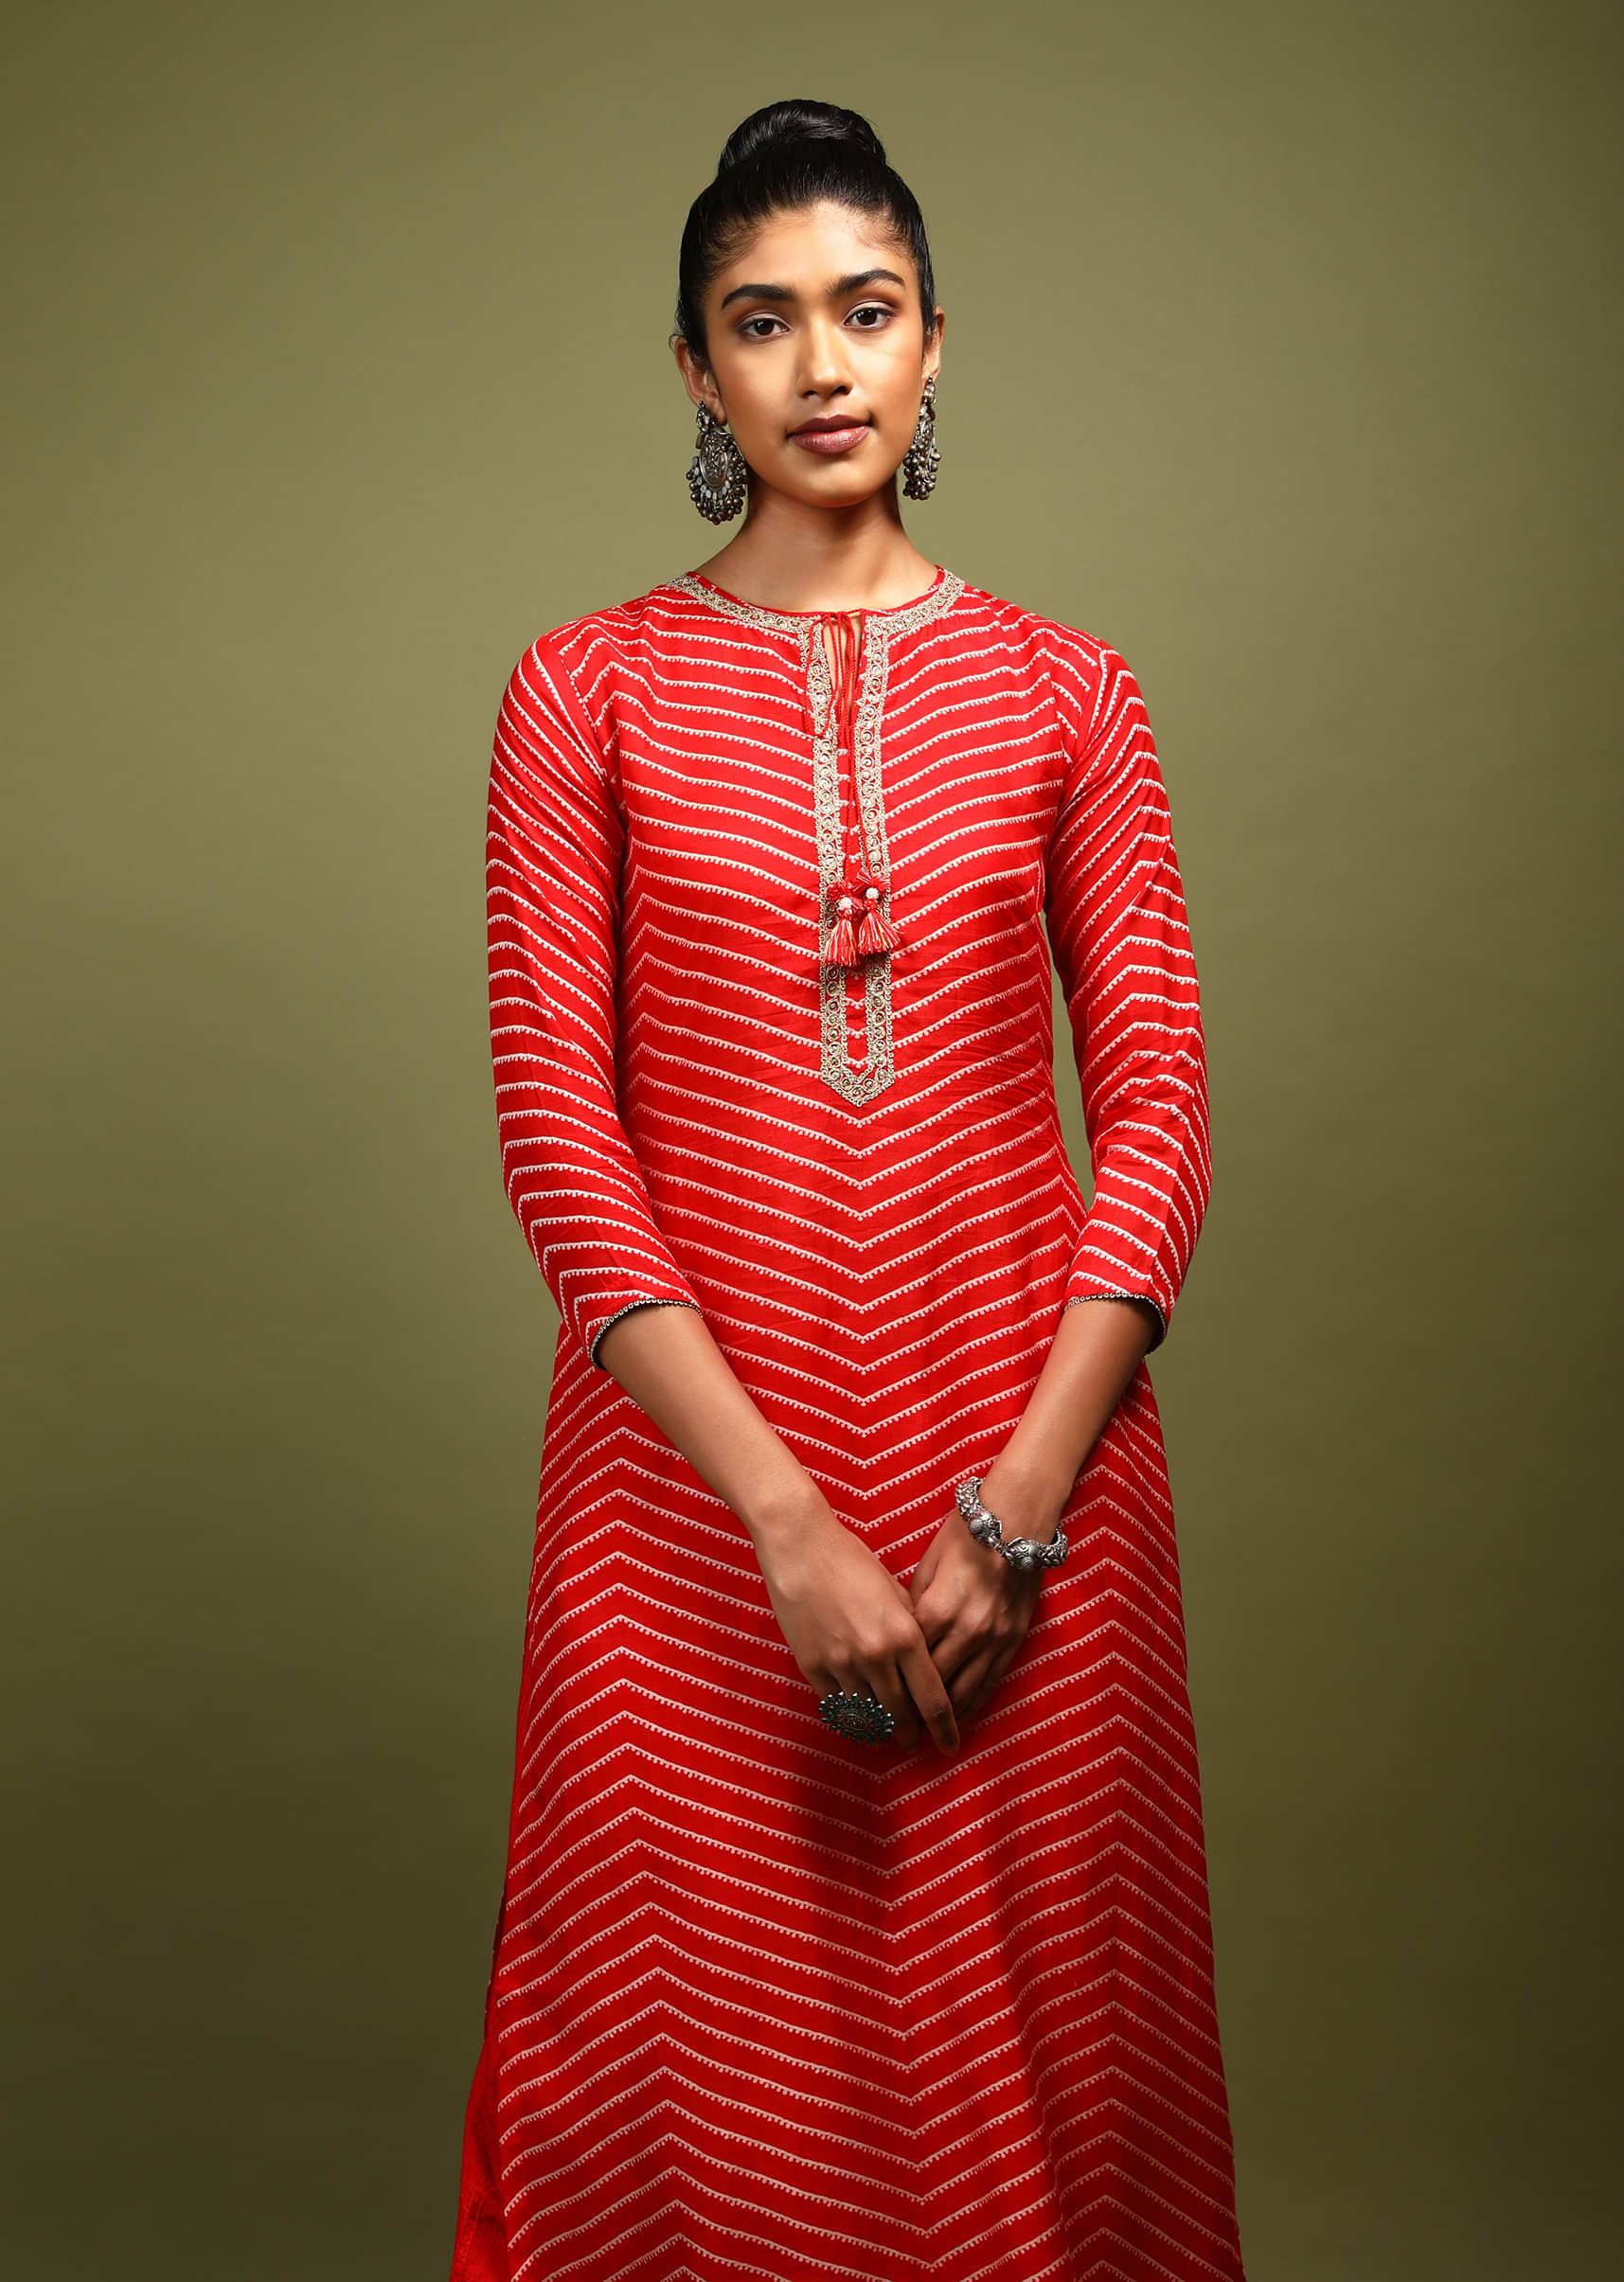 Red Kurta In Cotton With Batik Printed Chevron Design And Zari Work On The Neckline 